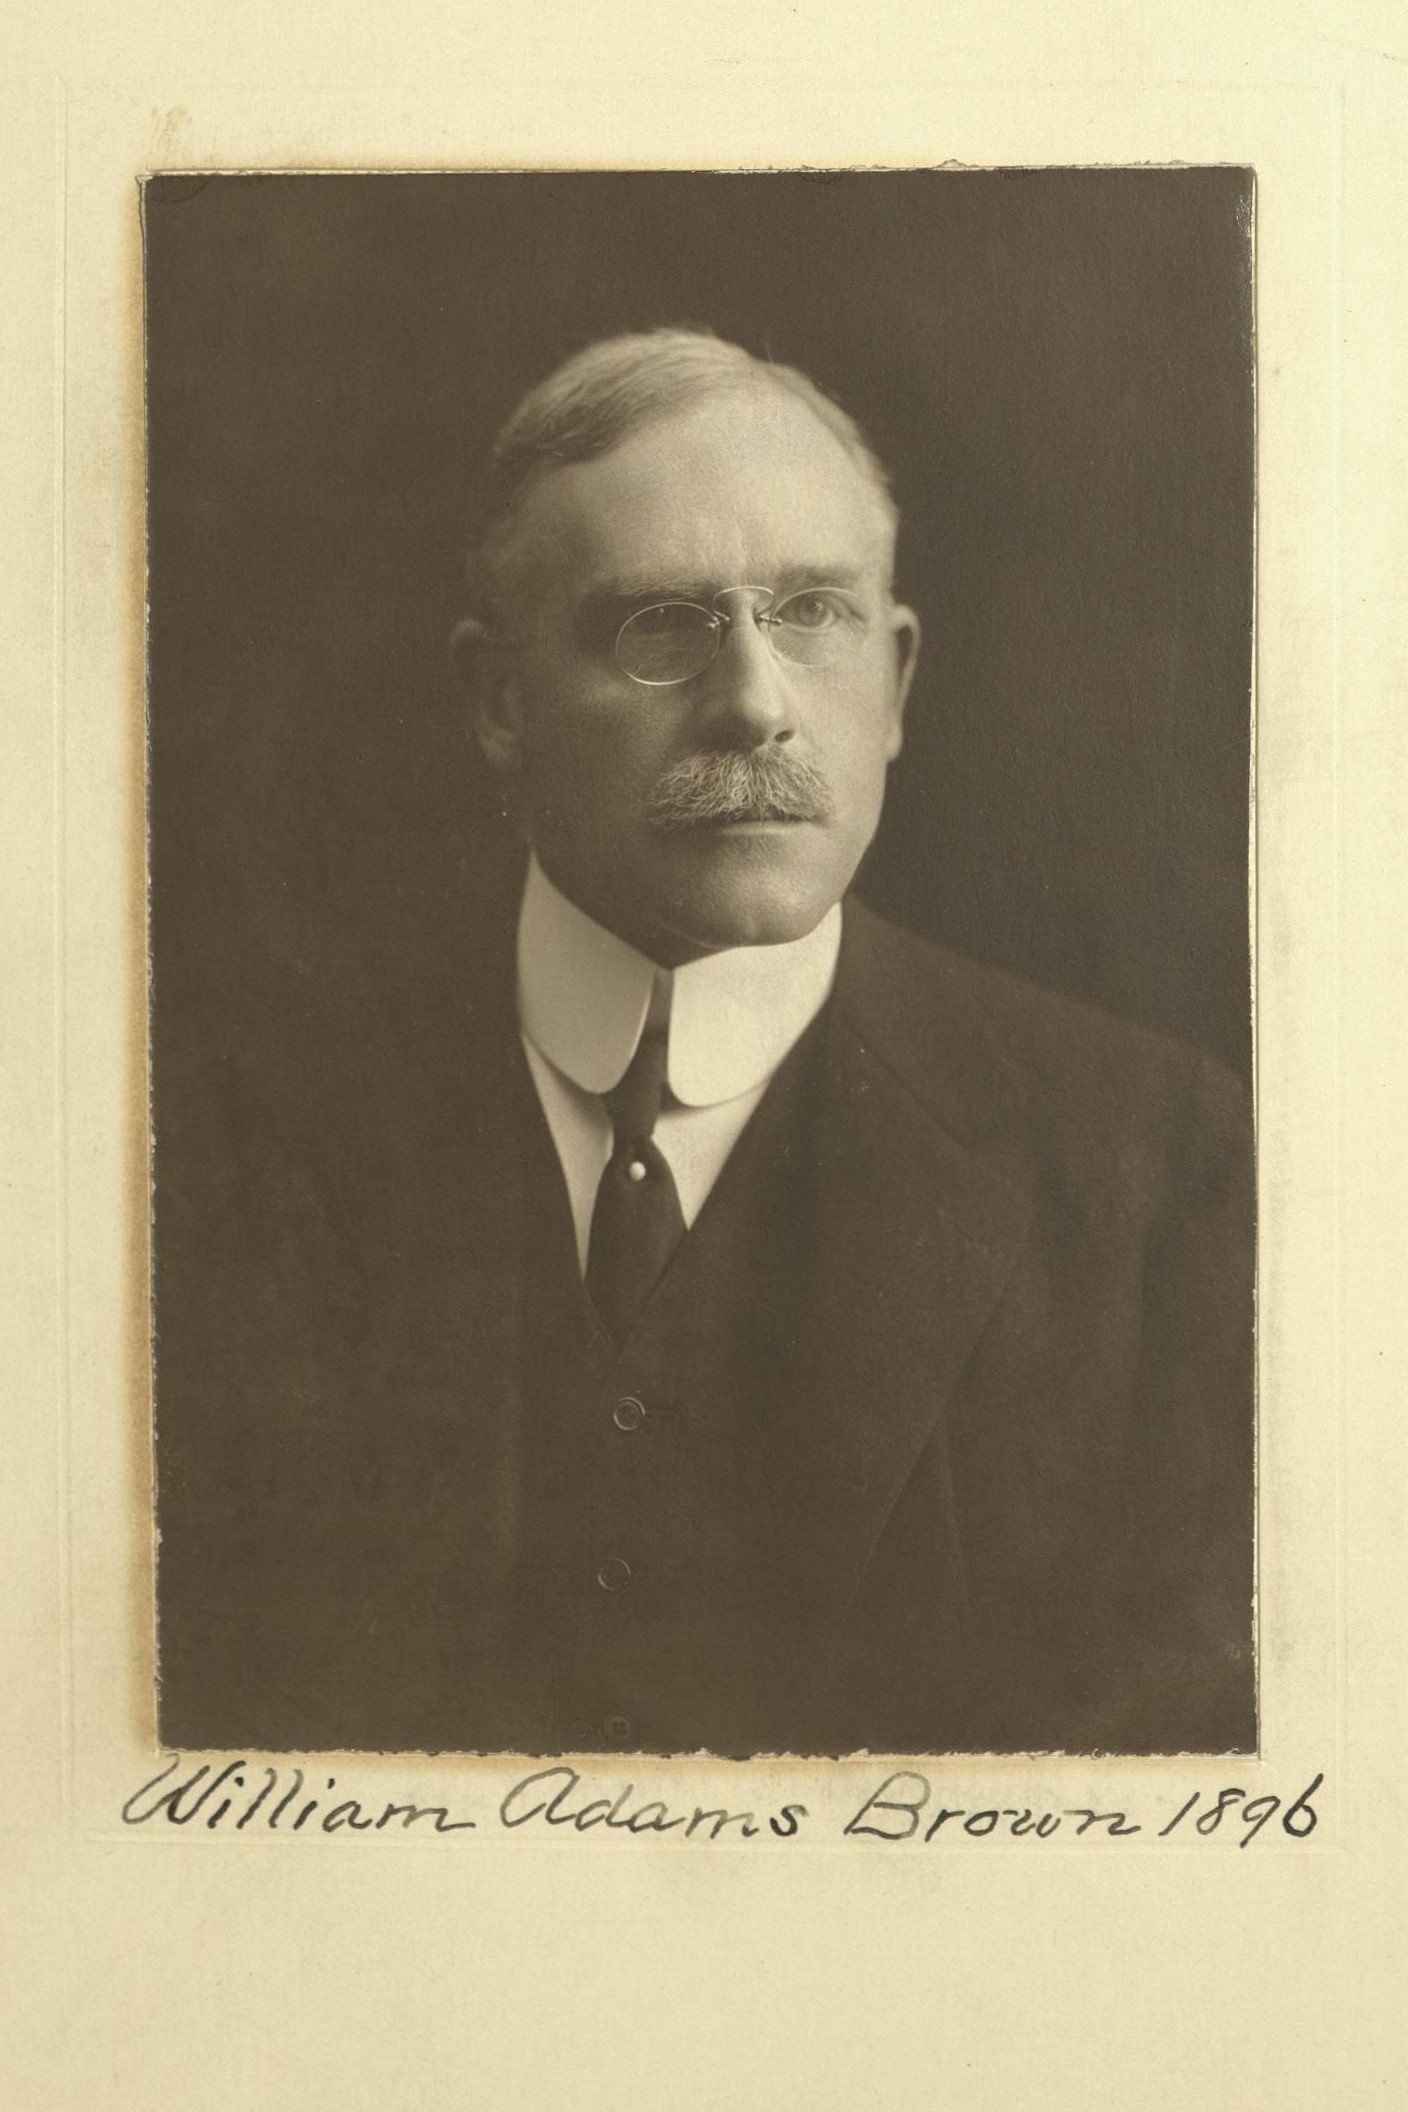 Member portrait of William Adams Brown